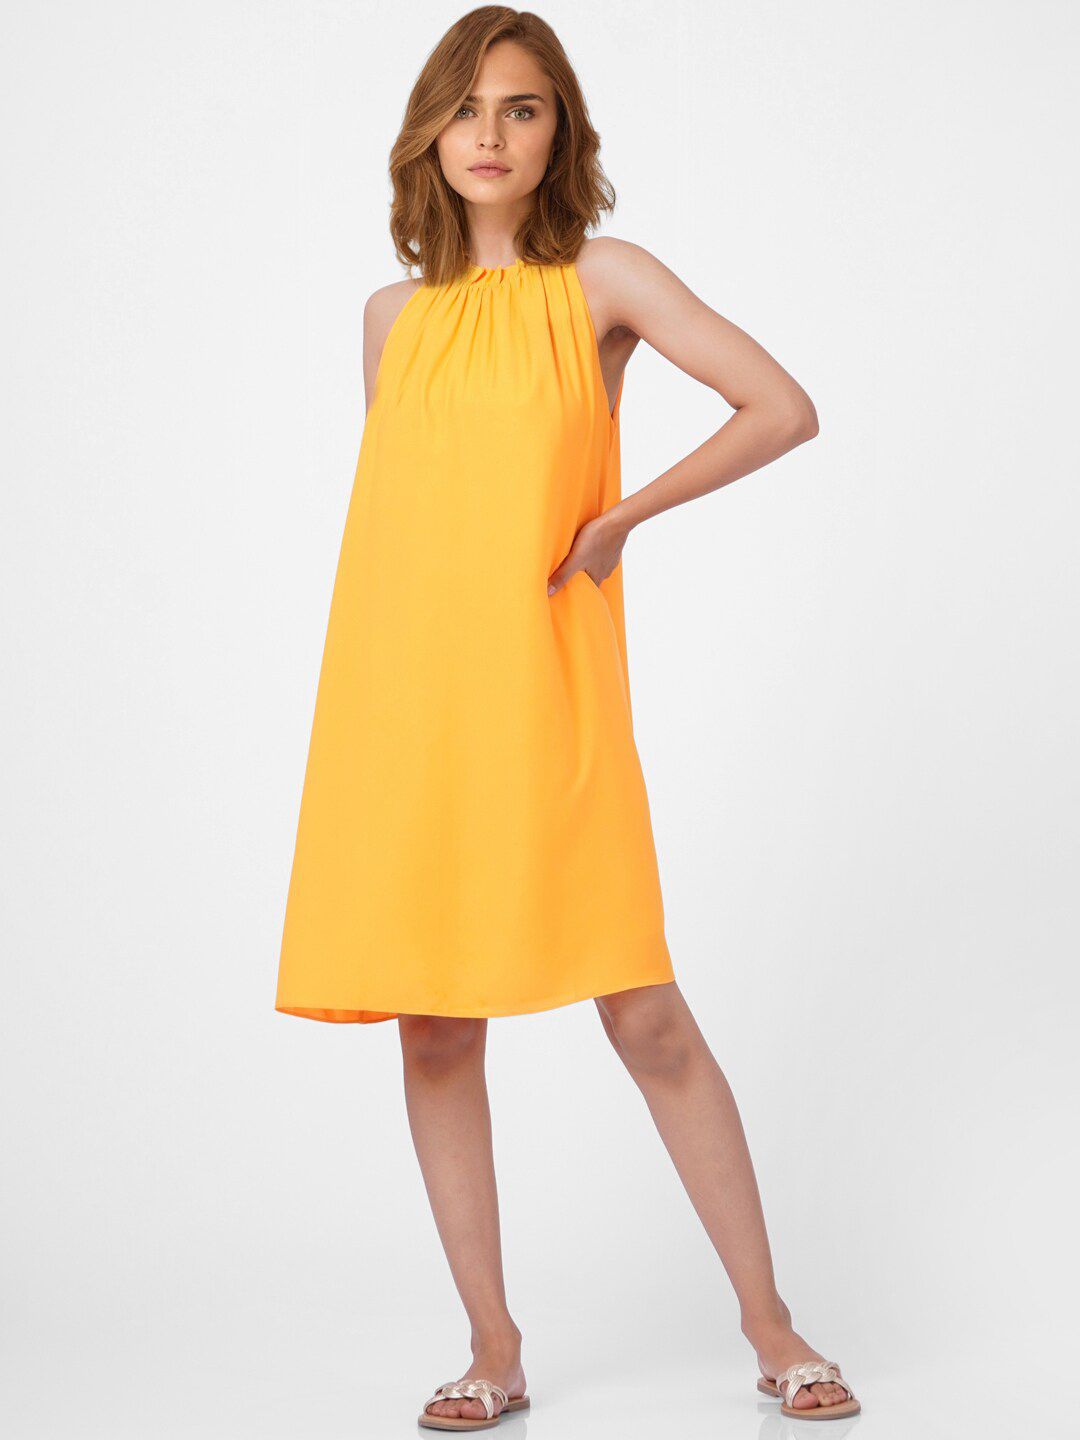 Vero Moda Orange A-Line Dress Price in India